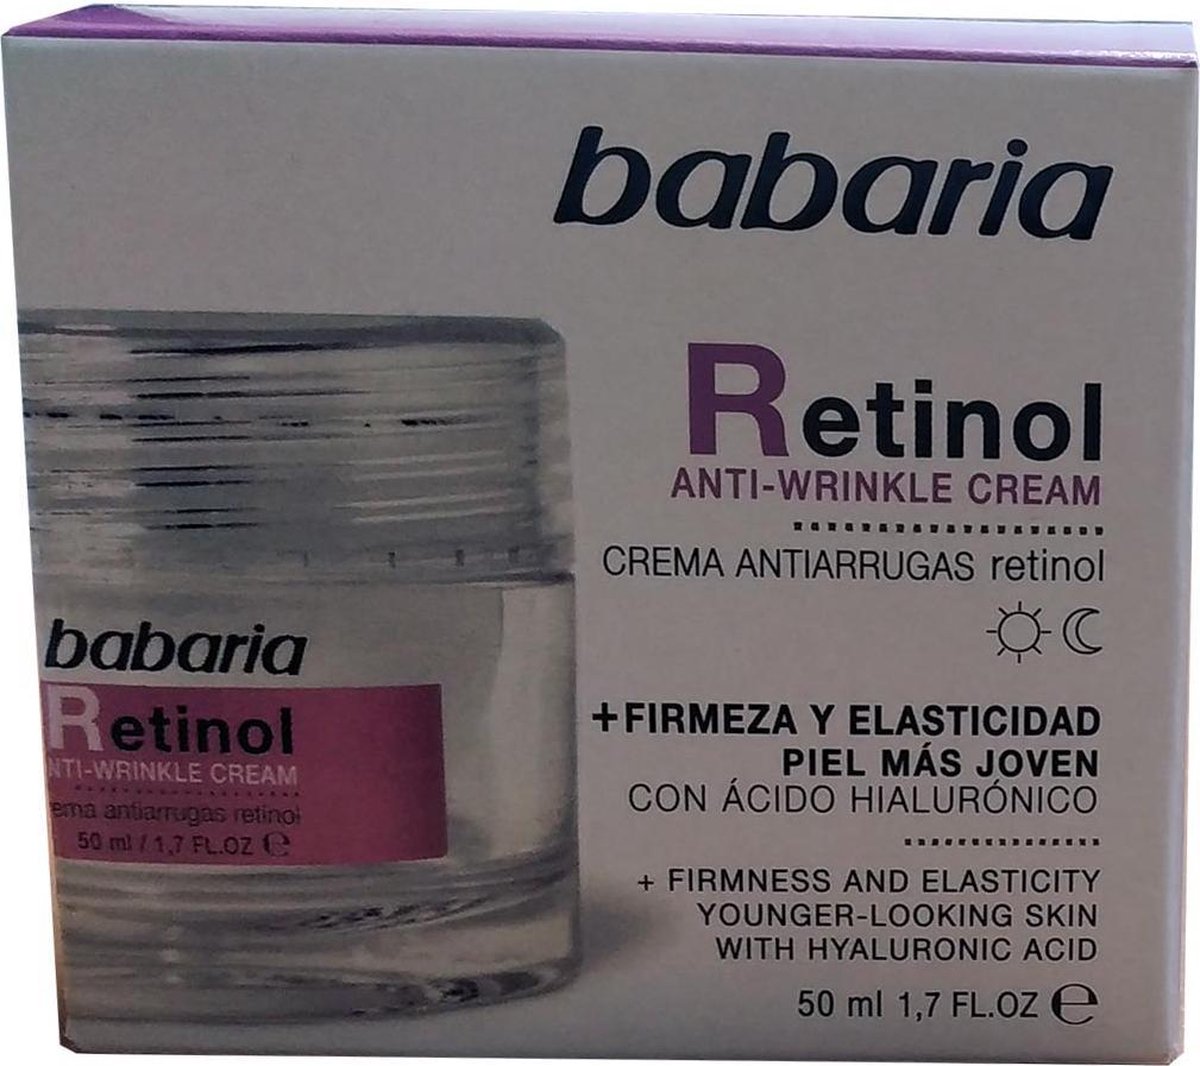 Babaria Retinol Anti-wrinkle Cream 50ml